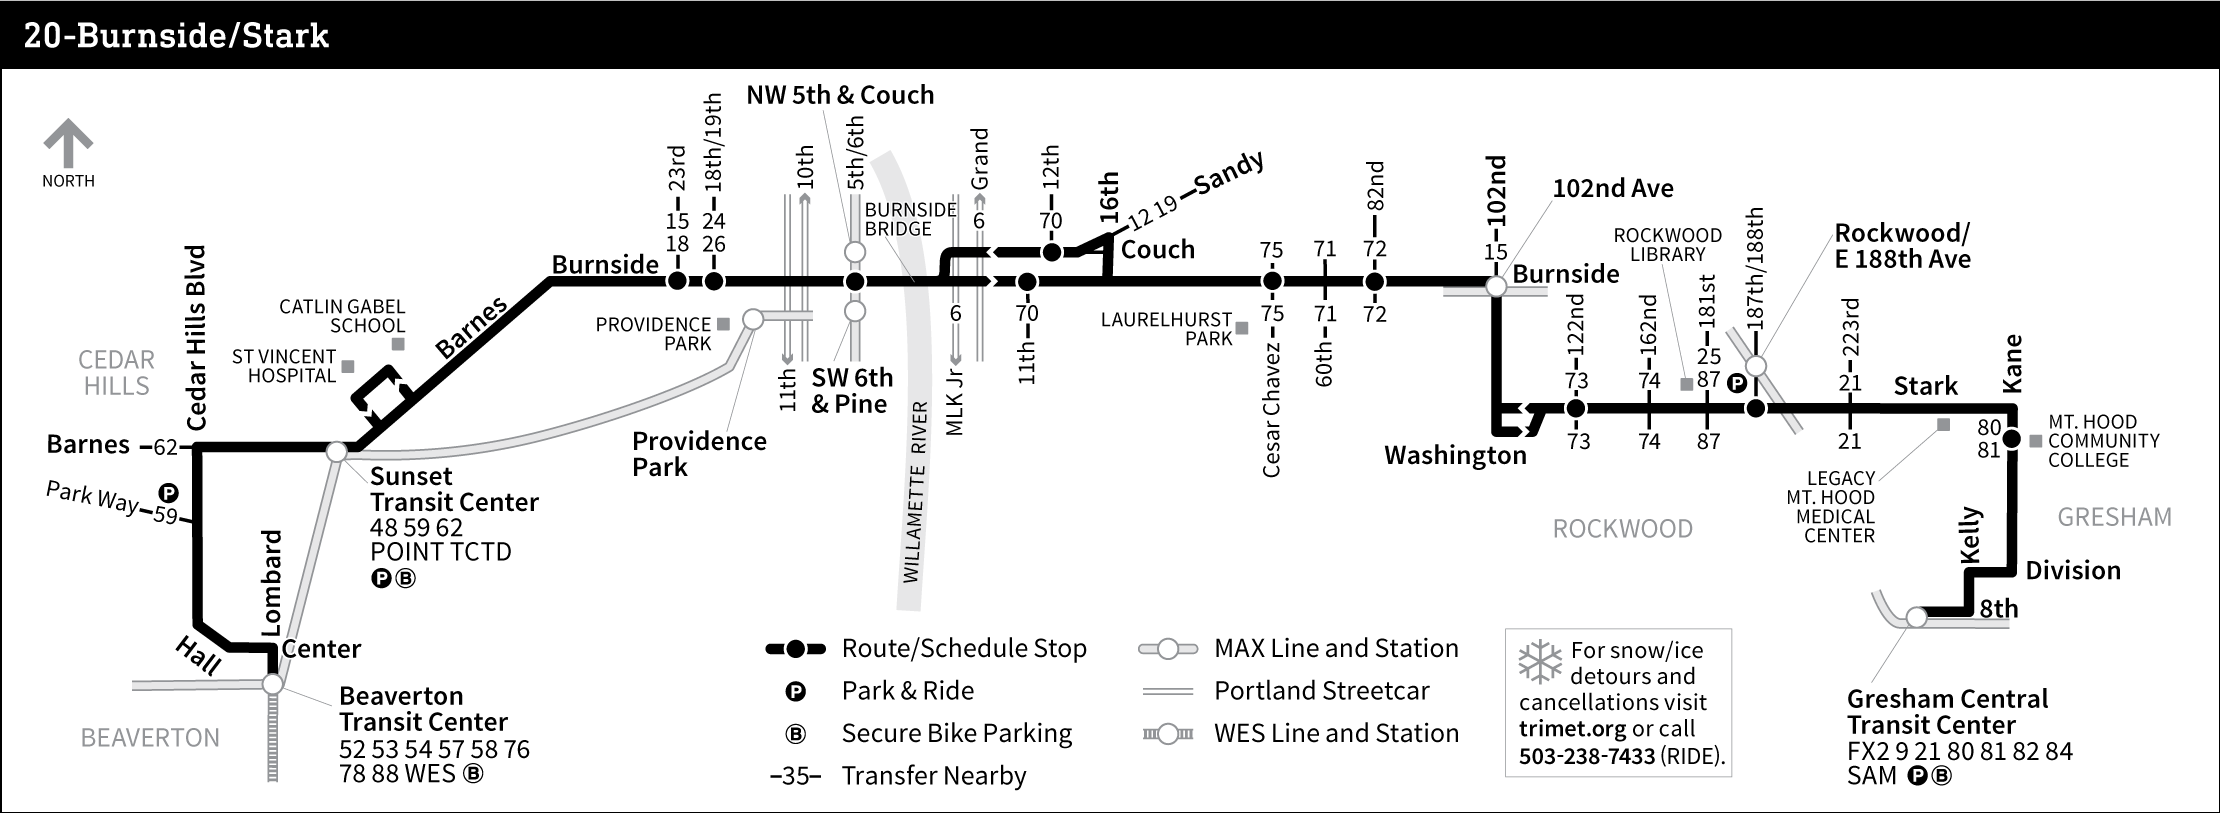 Bus Line 20 route map